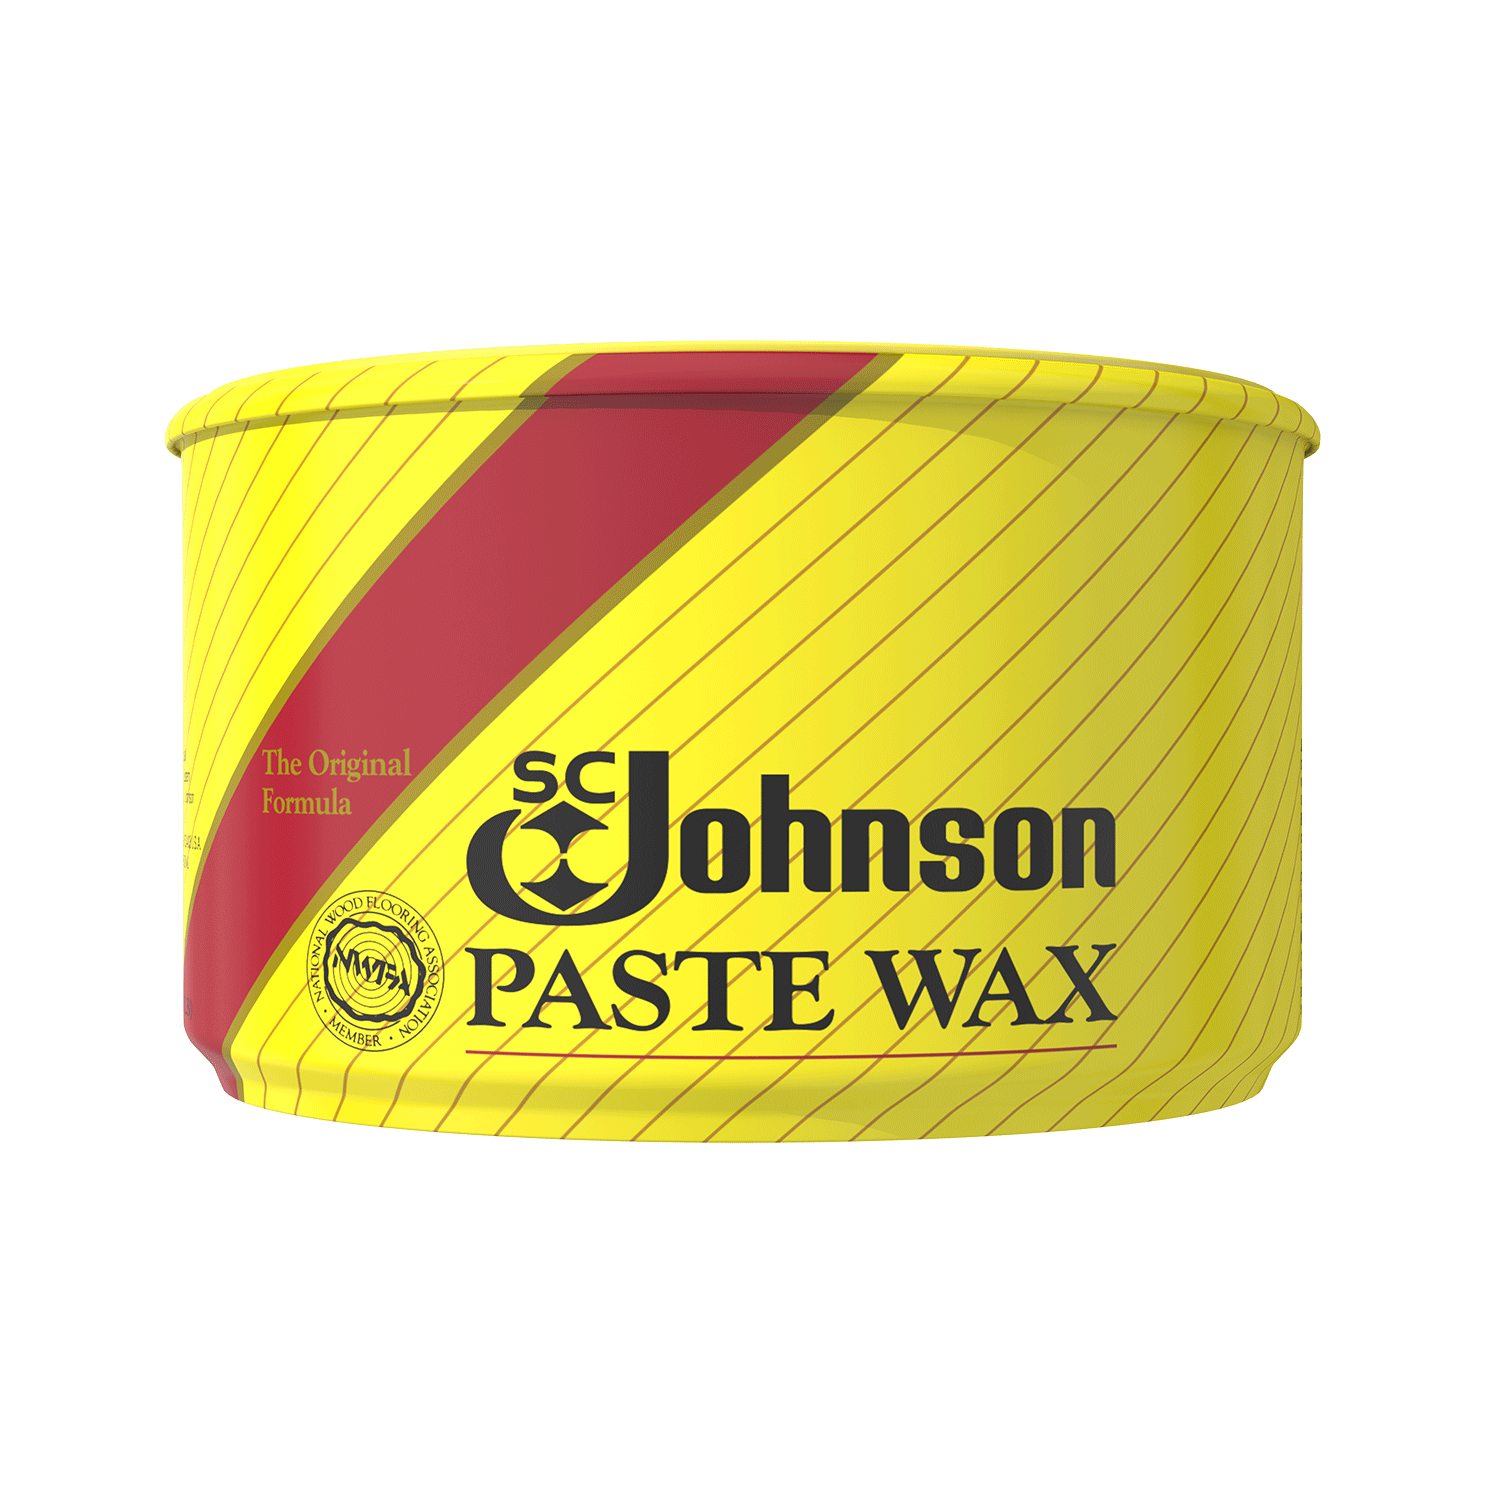 johnson paste wax uses